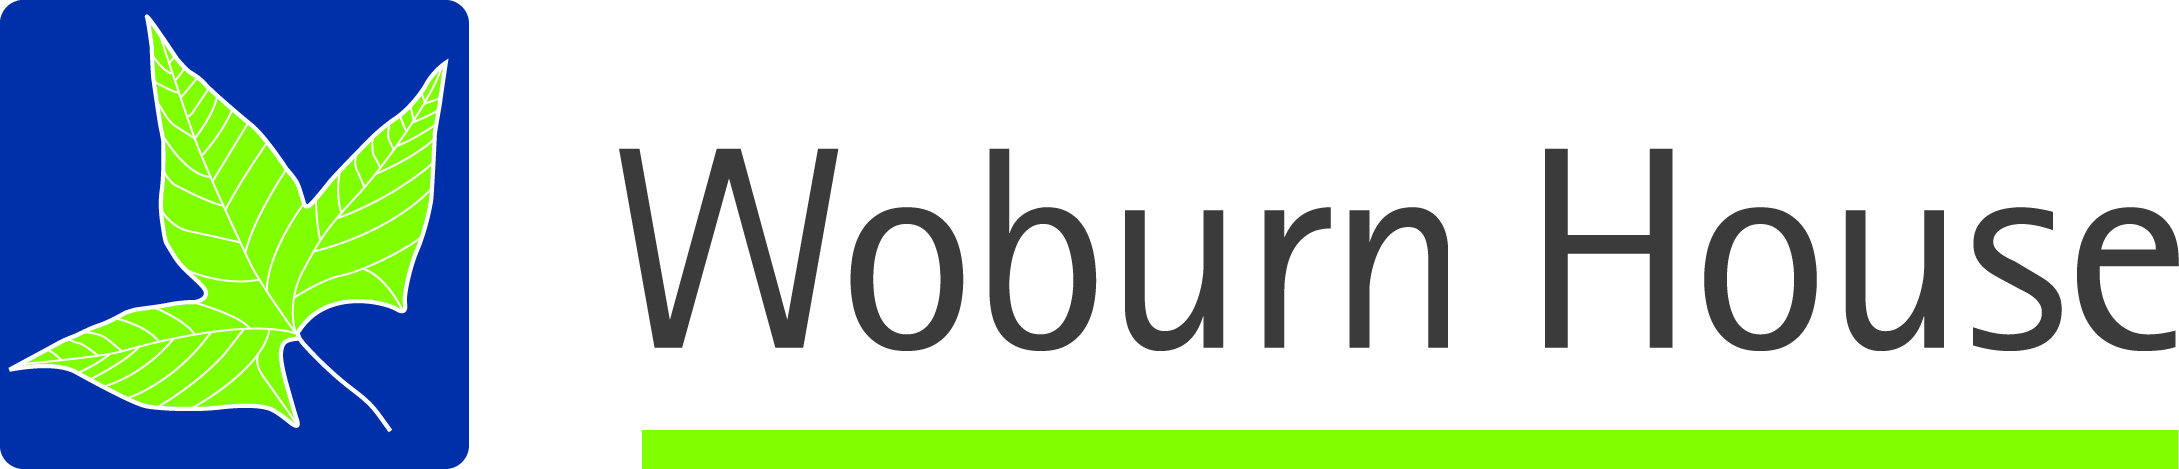 logo for Woburn House Conference Centre Ltd